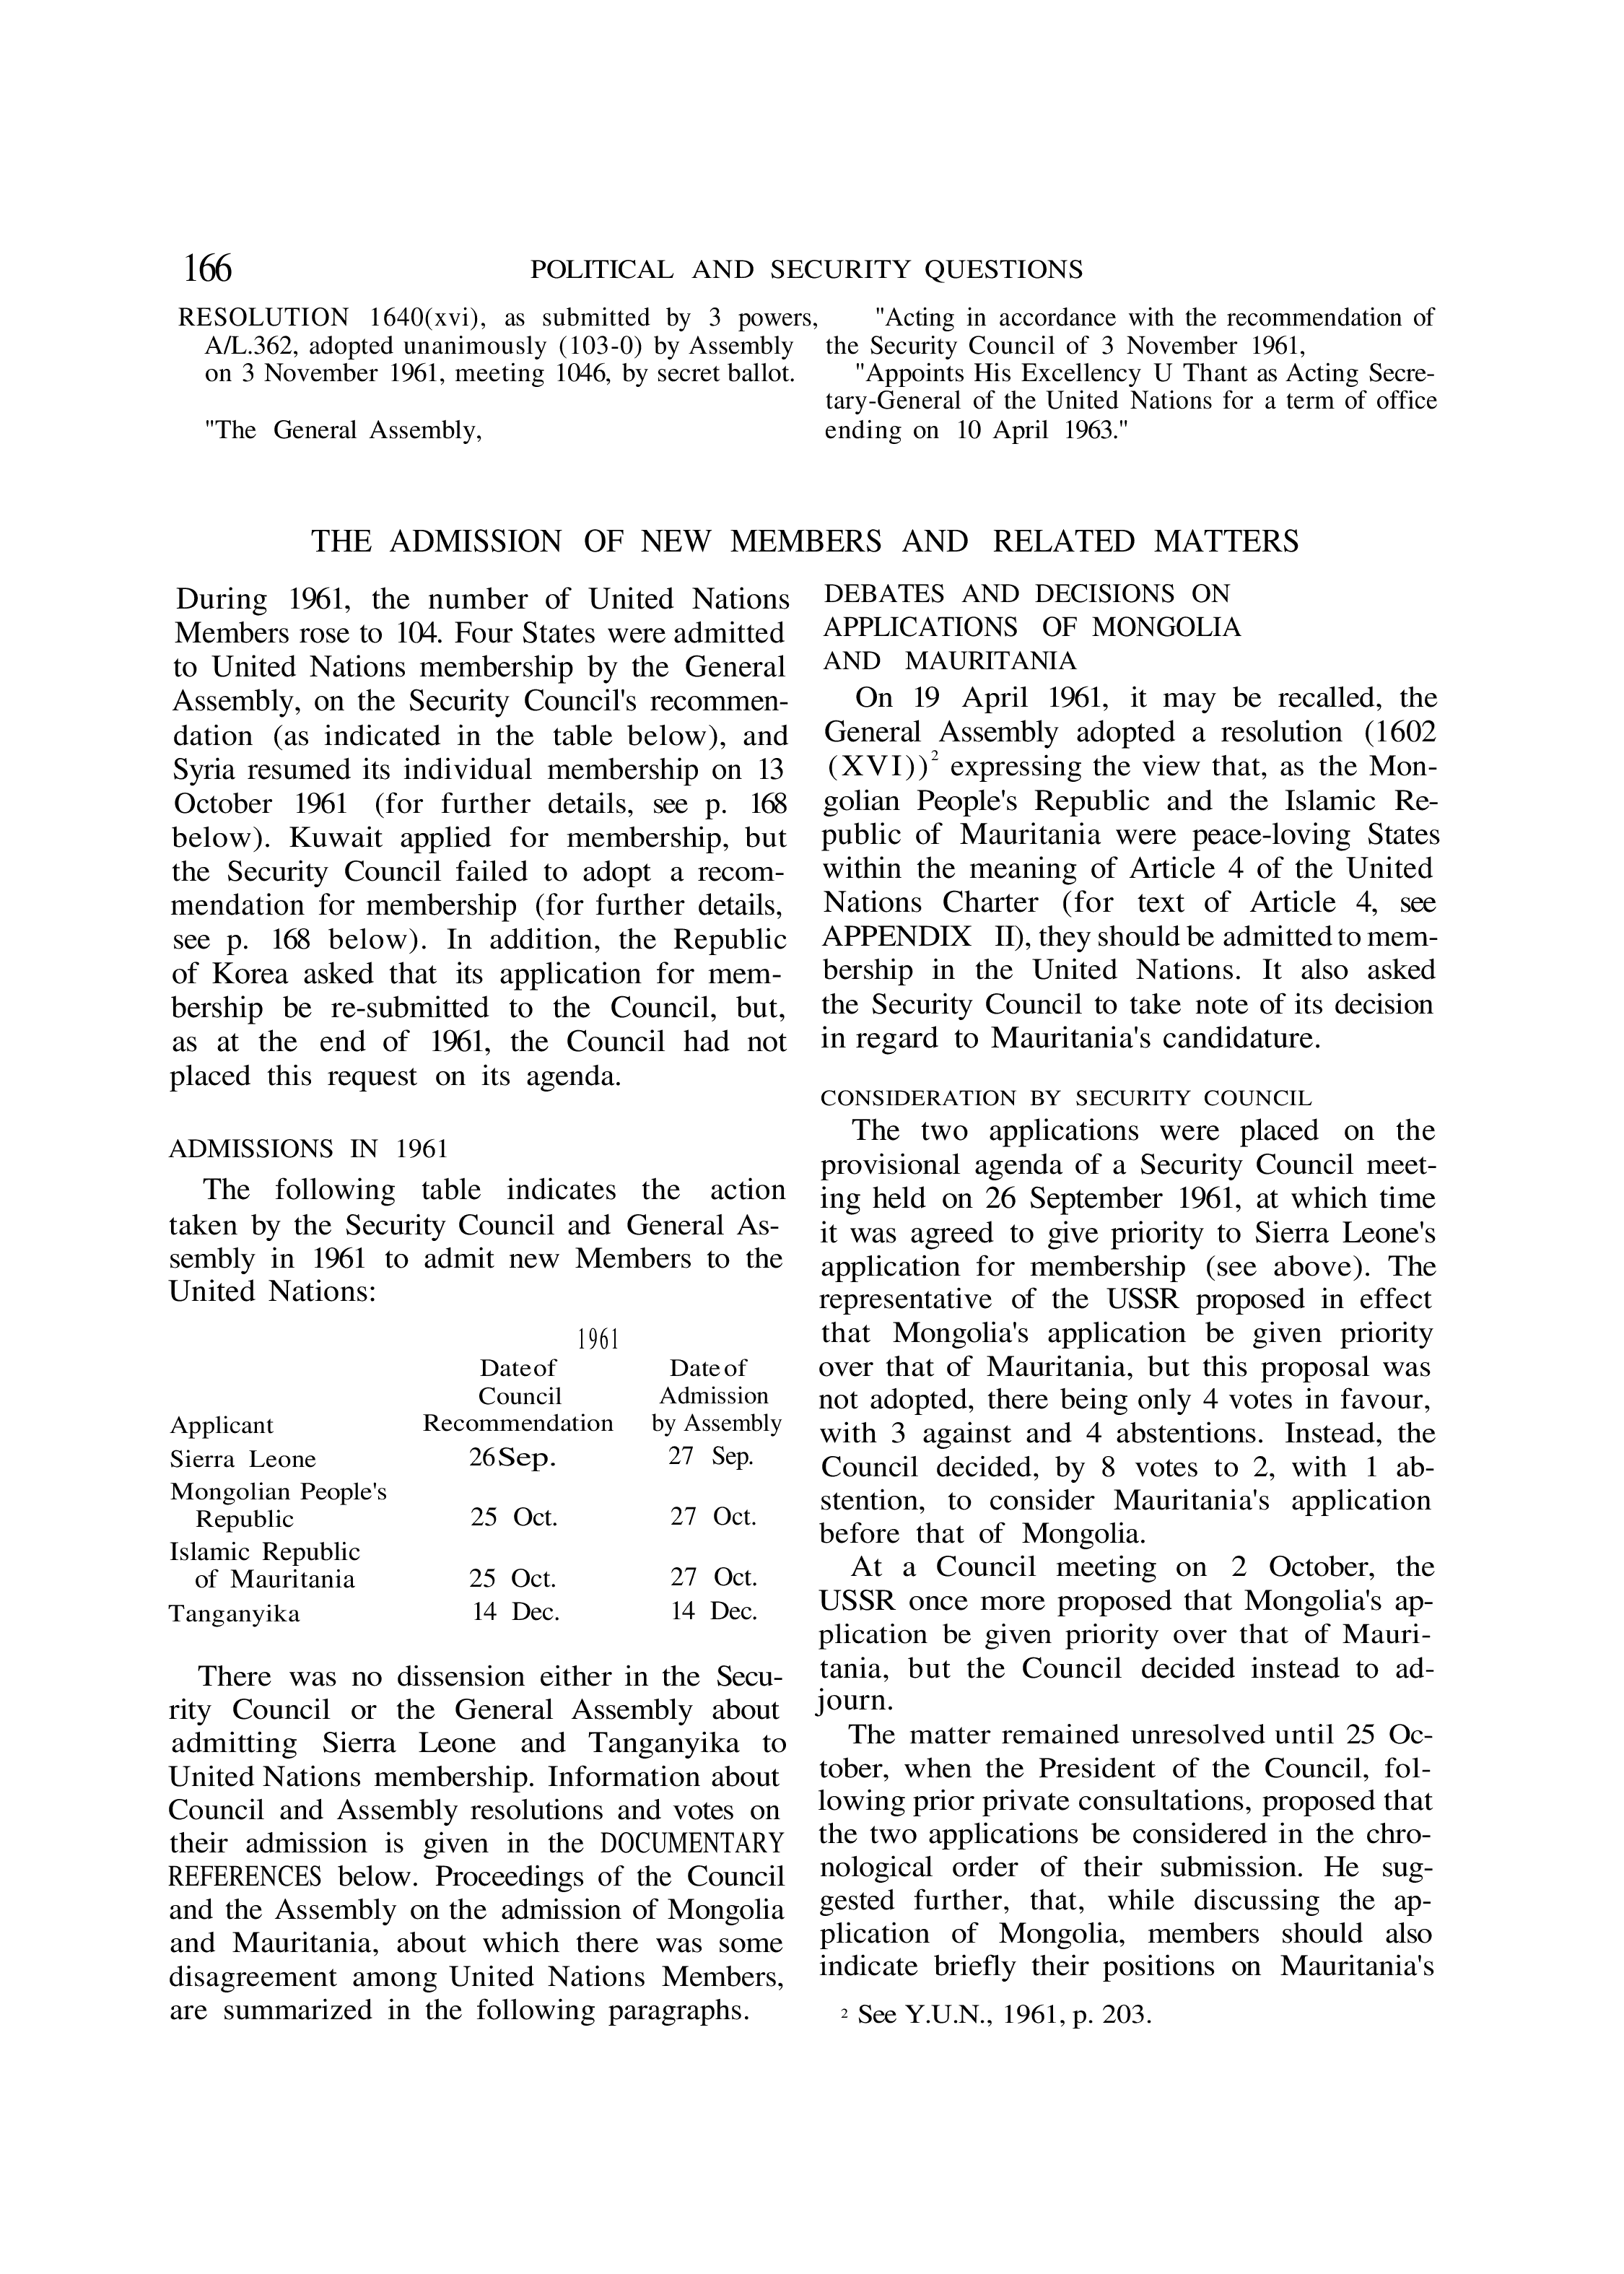 YUN Volume_Page 1961_177